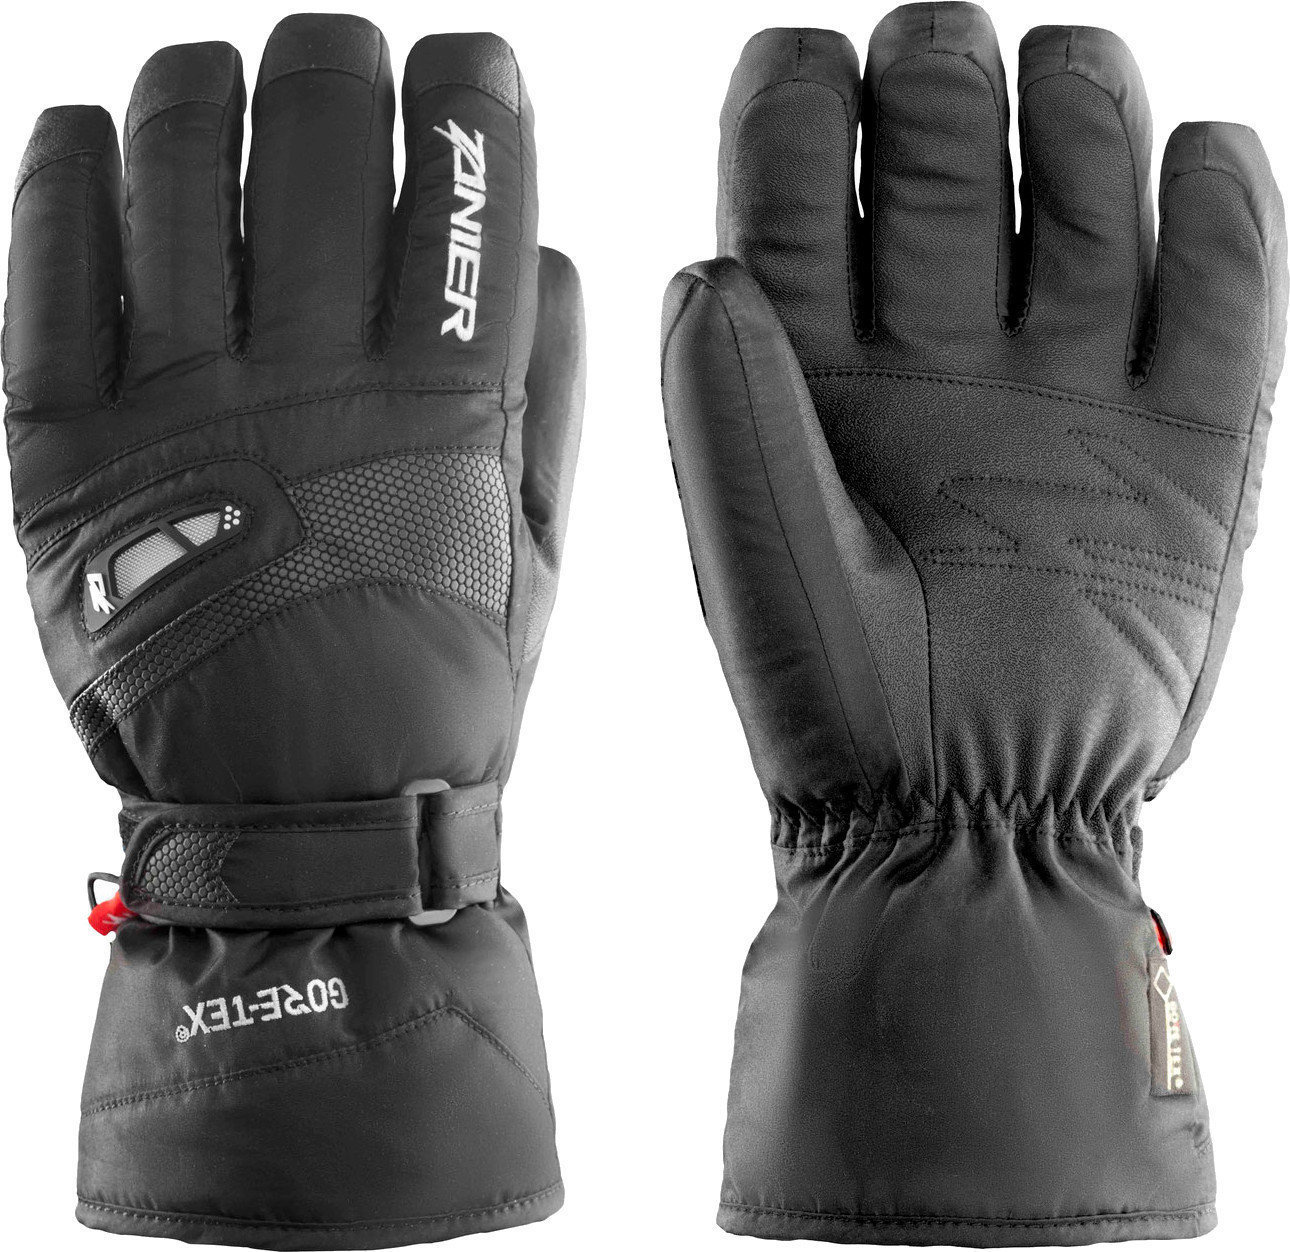 SkI Handschuhe Zanier Kitzbuhel.GTX Black XL